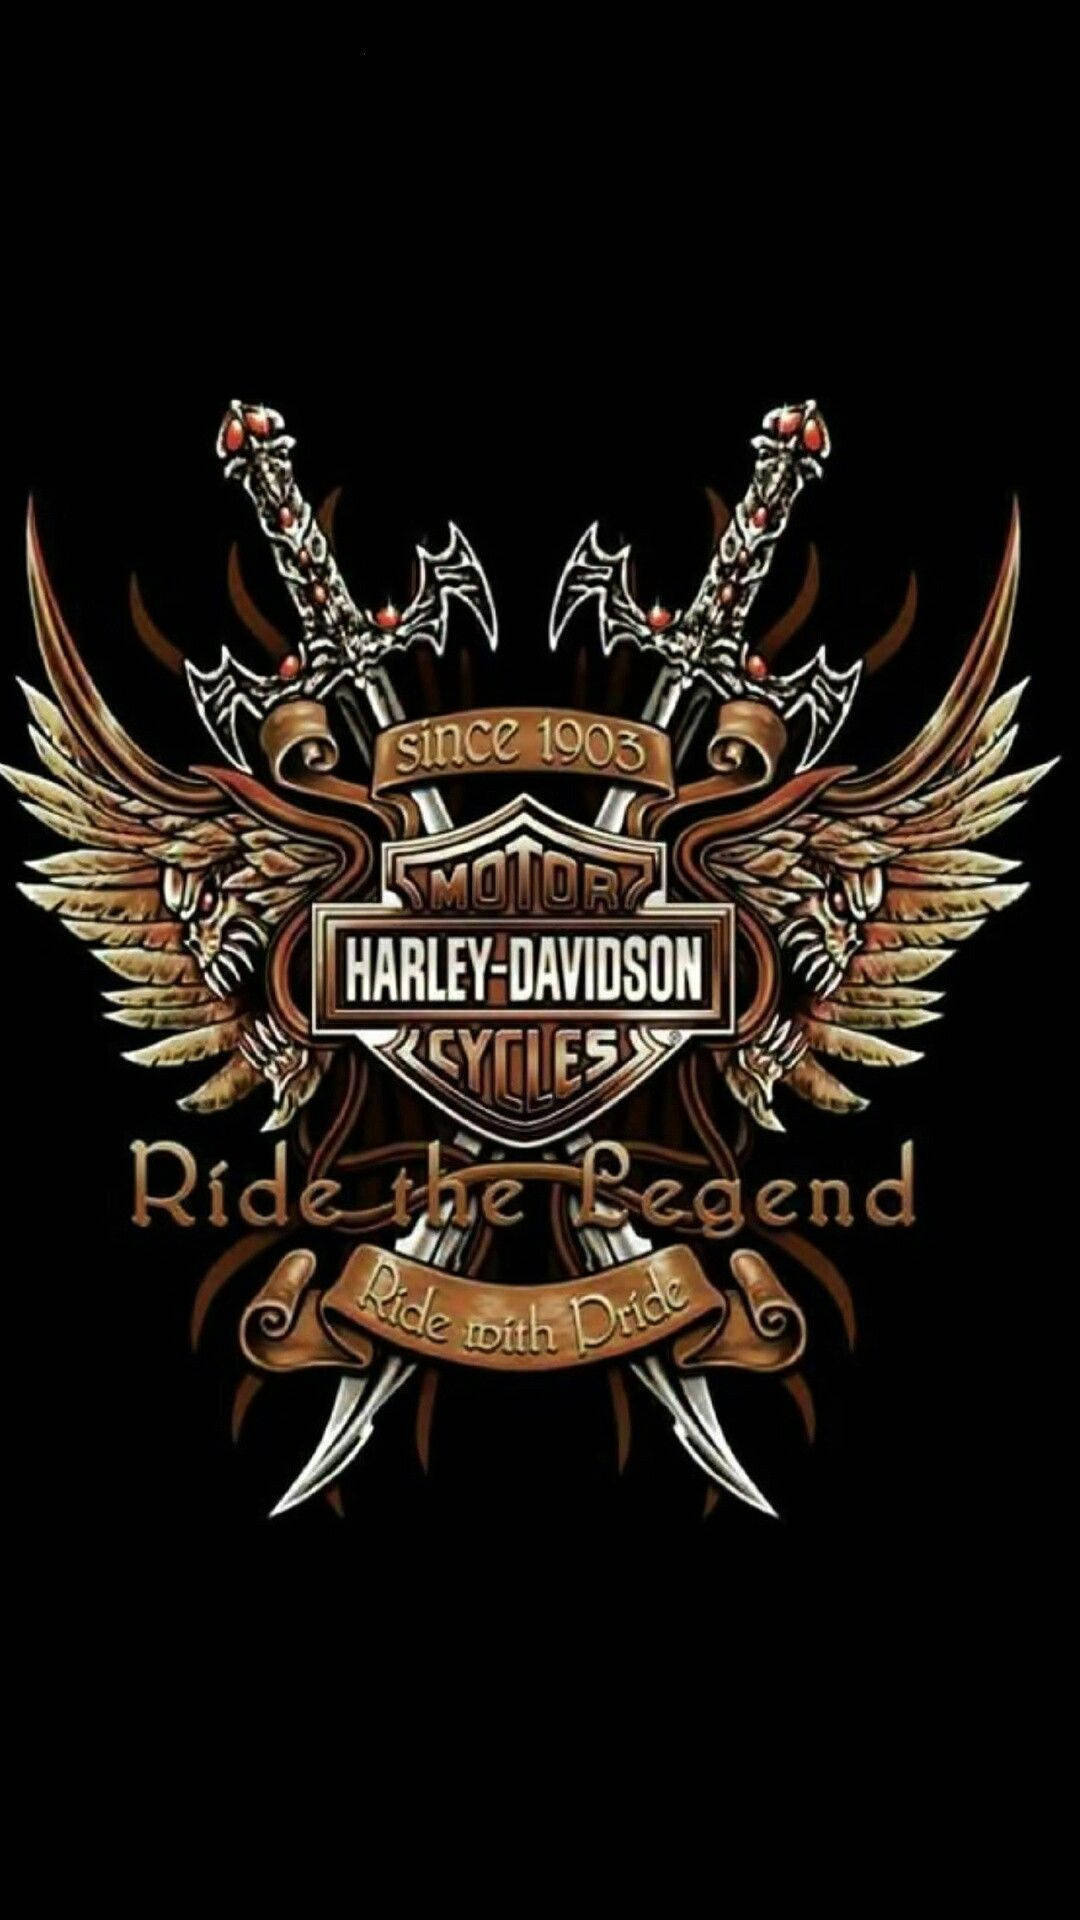 Ride With Pride Harley Davidson Logo Wallpaper